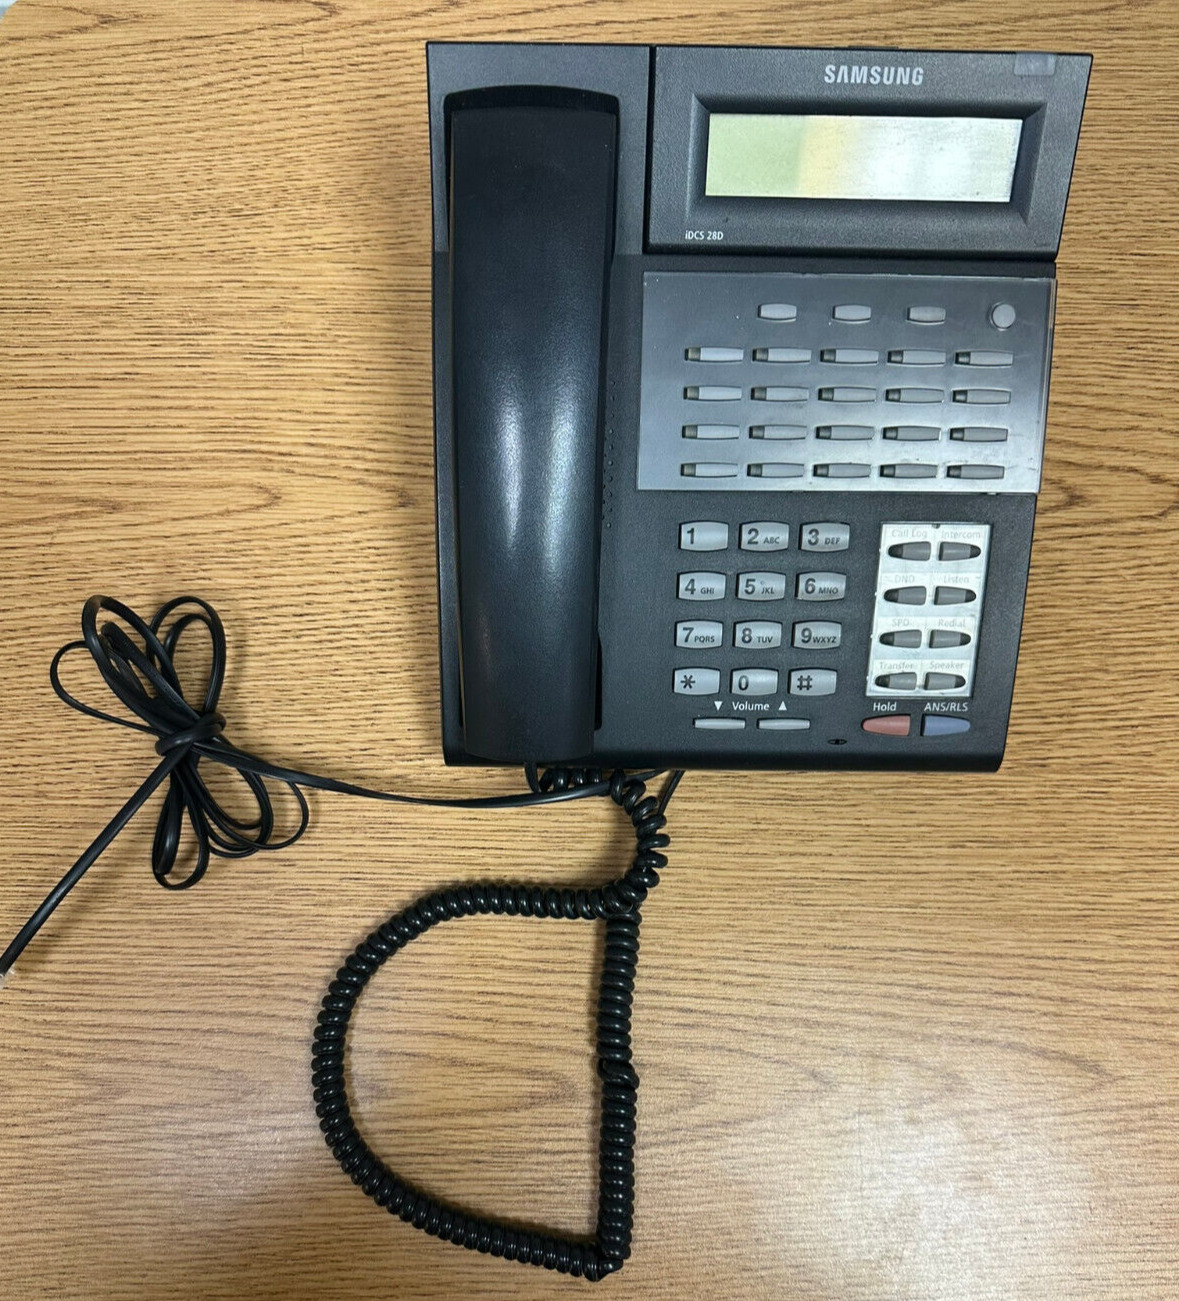 Samsung iDCS 28D Digital Telephone Black with Handset Desk Phone Working